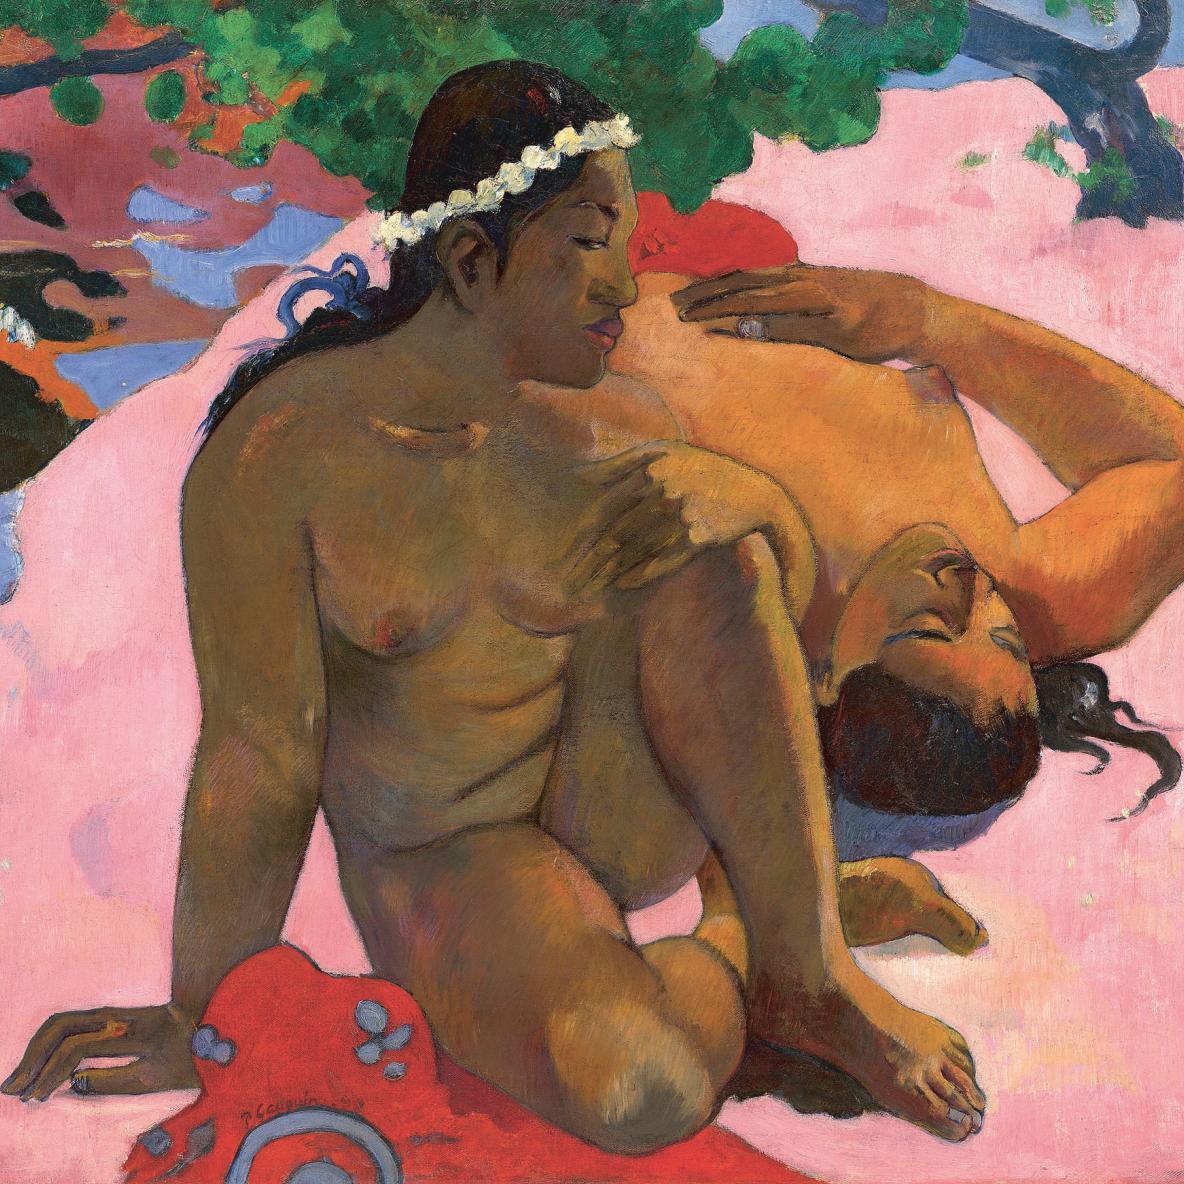 Gauguin: Historical Sales  - Market Trends